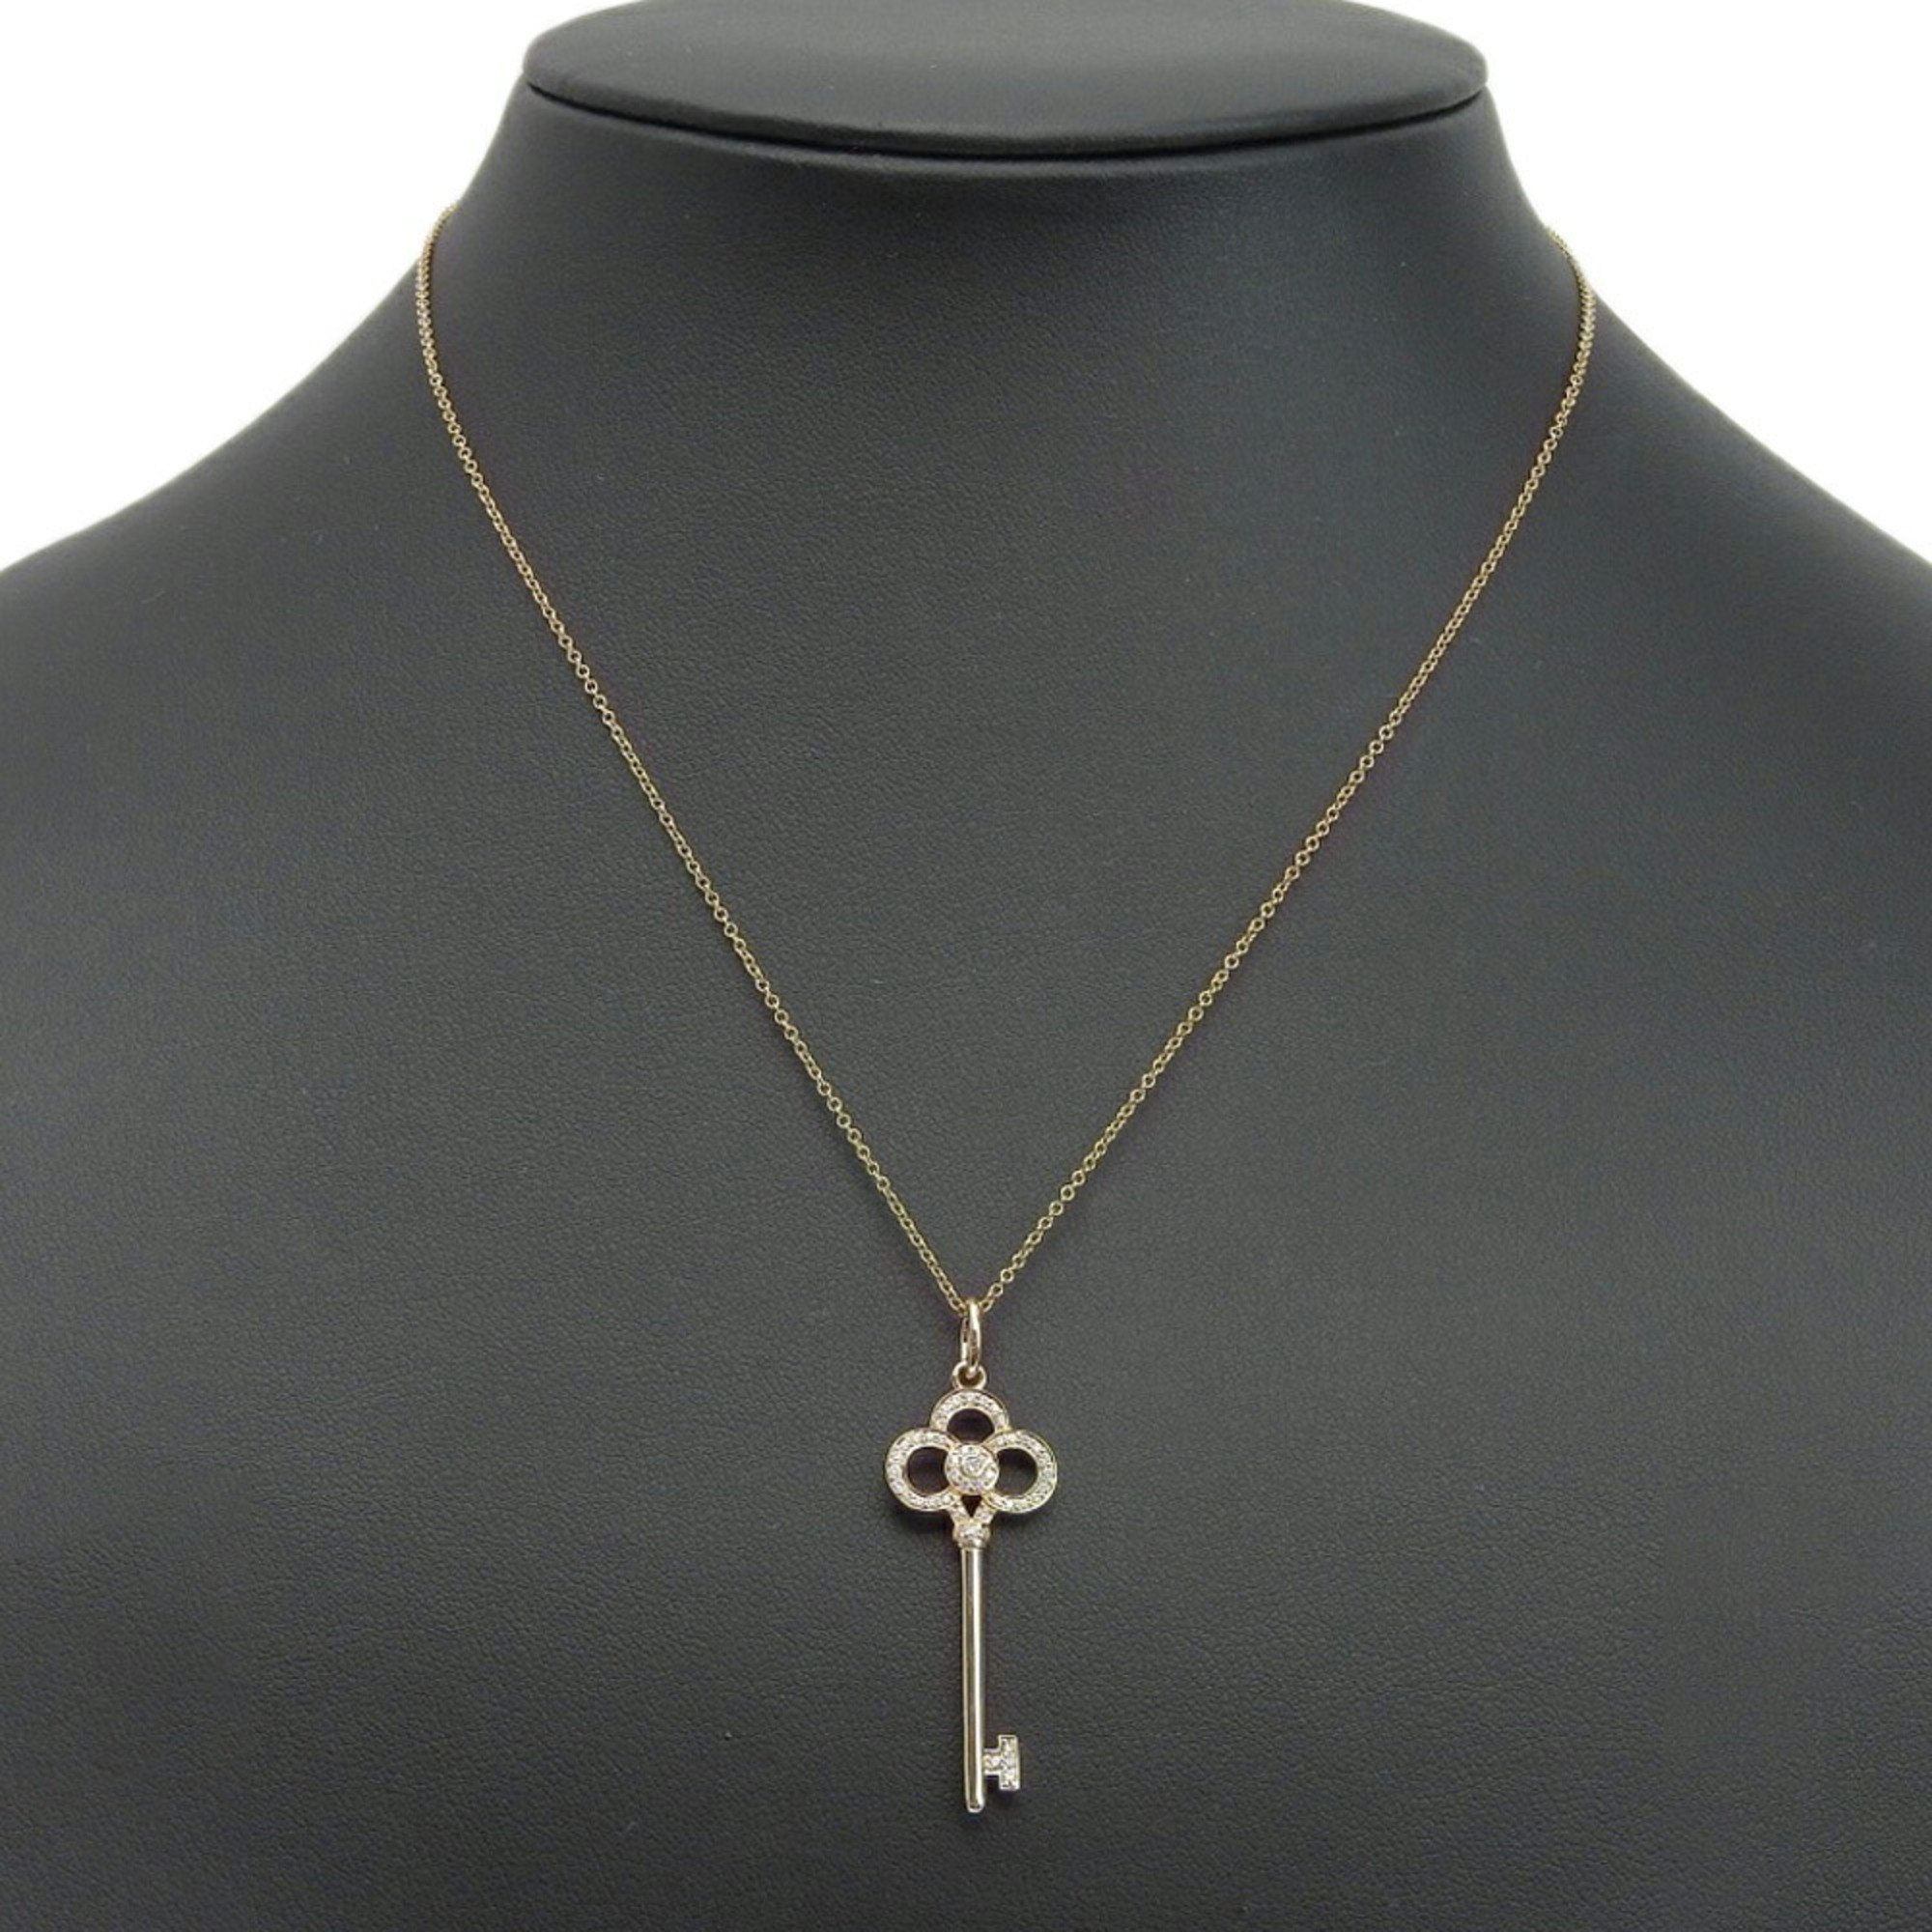 Tiffany & Co. Lock Crown Key Necklace, K18 Pink Gold x Diamond, d0.13ct, approx. 4.2g, Key, Women's